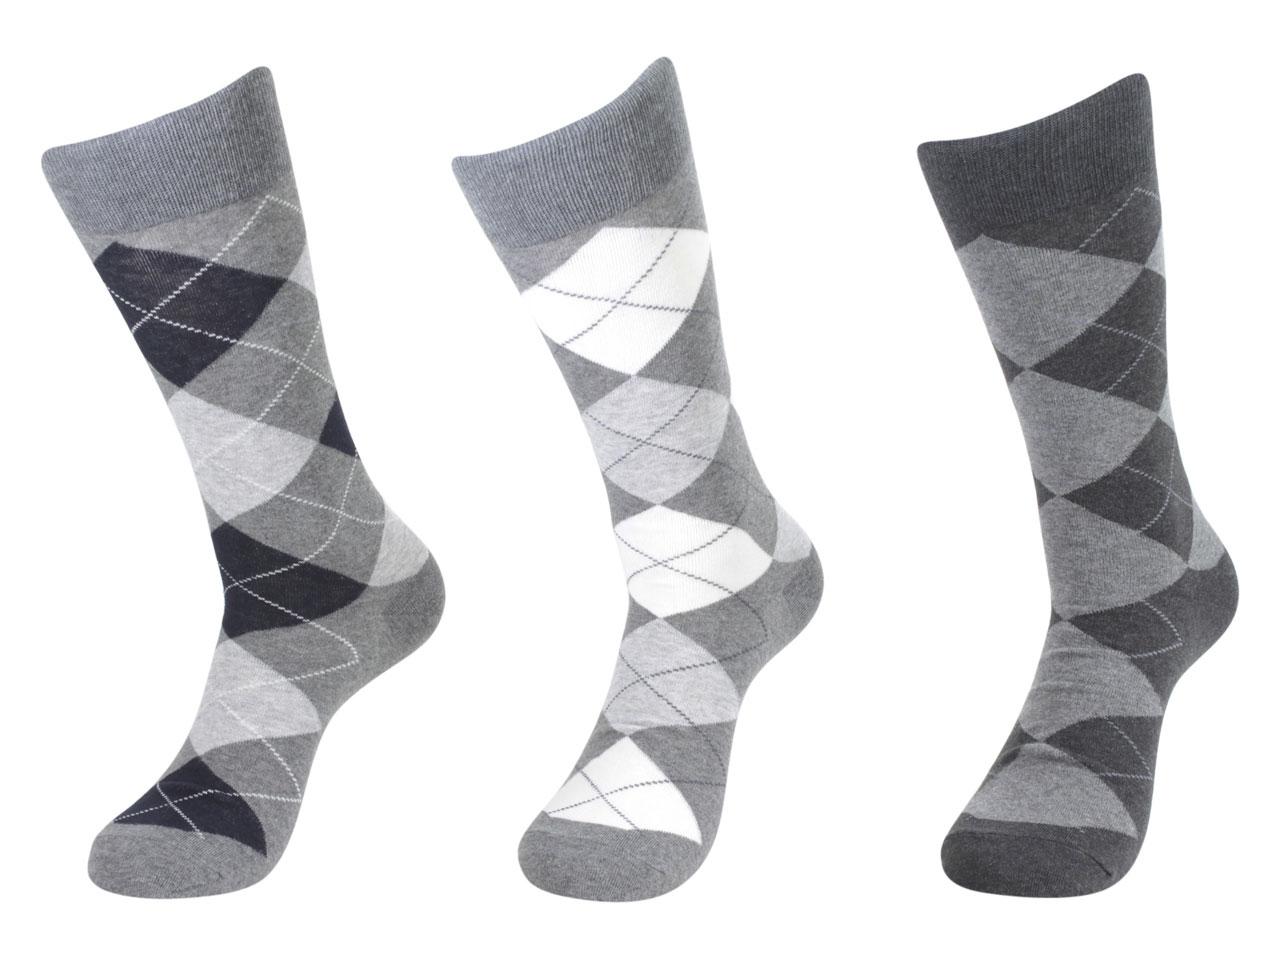 Polo Ralph Lauren Men's 3 Pair Argyle Dress Socks - Grey - 10 13 Fits 6 12.5